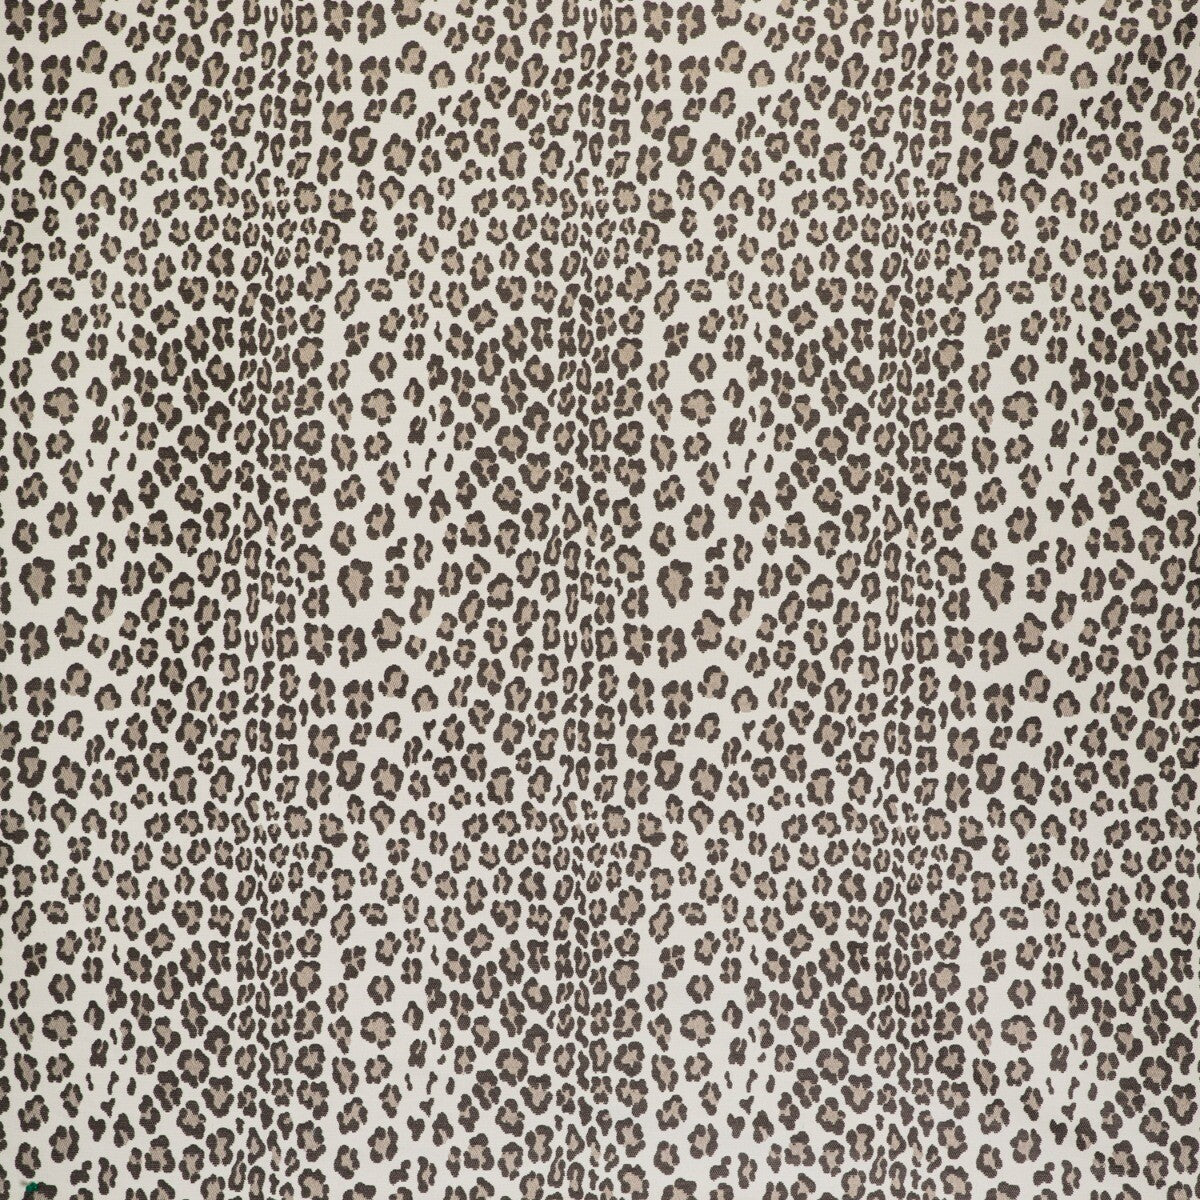 Leopardo fabric in marron color - pattern GDT5515.002.0 - by Gaston y Daniela in the Gaston Libreria collection